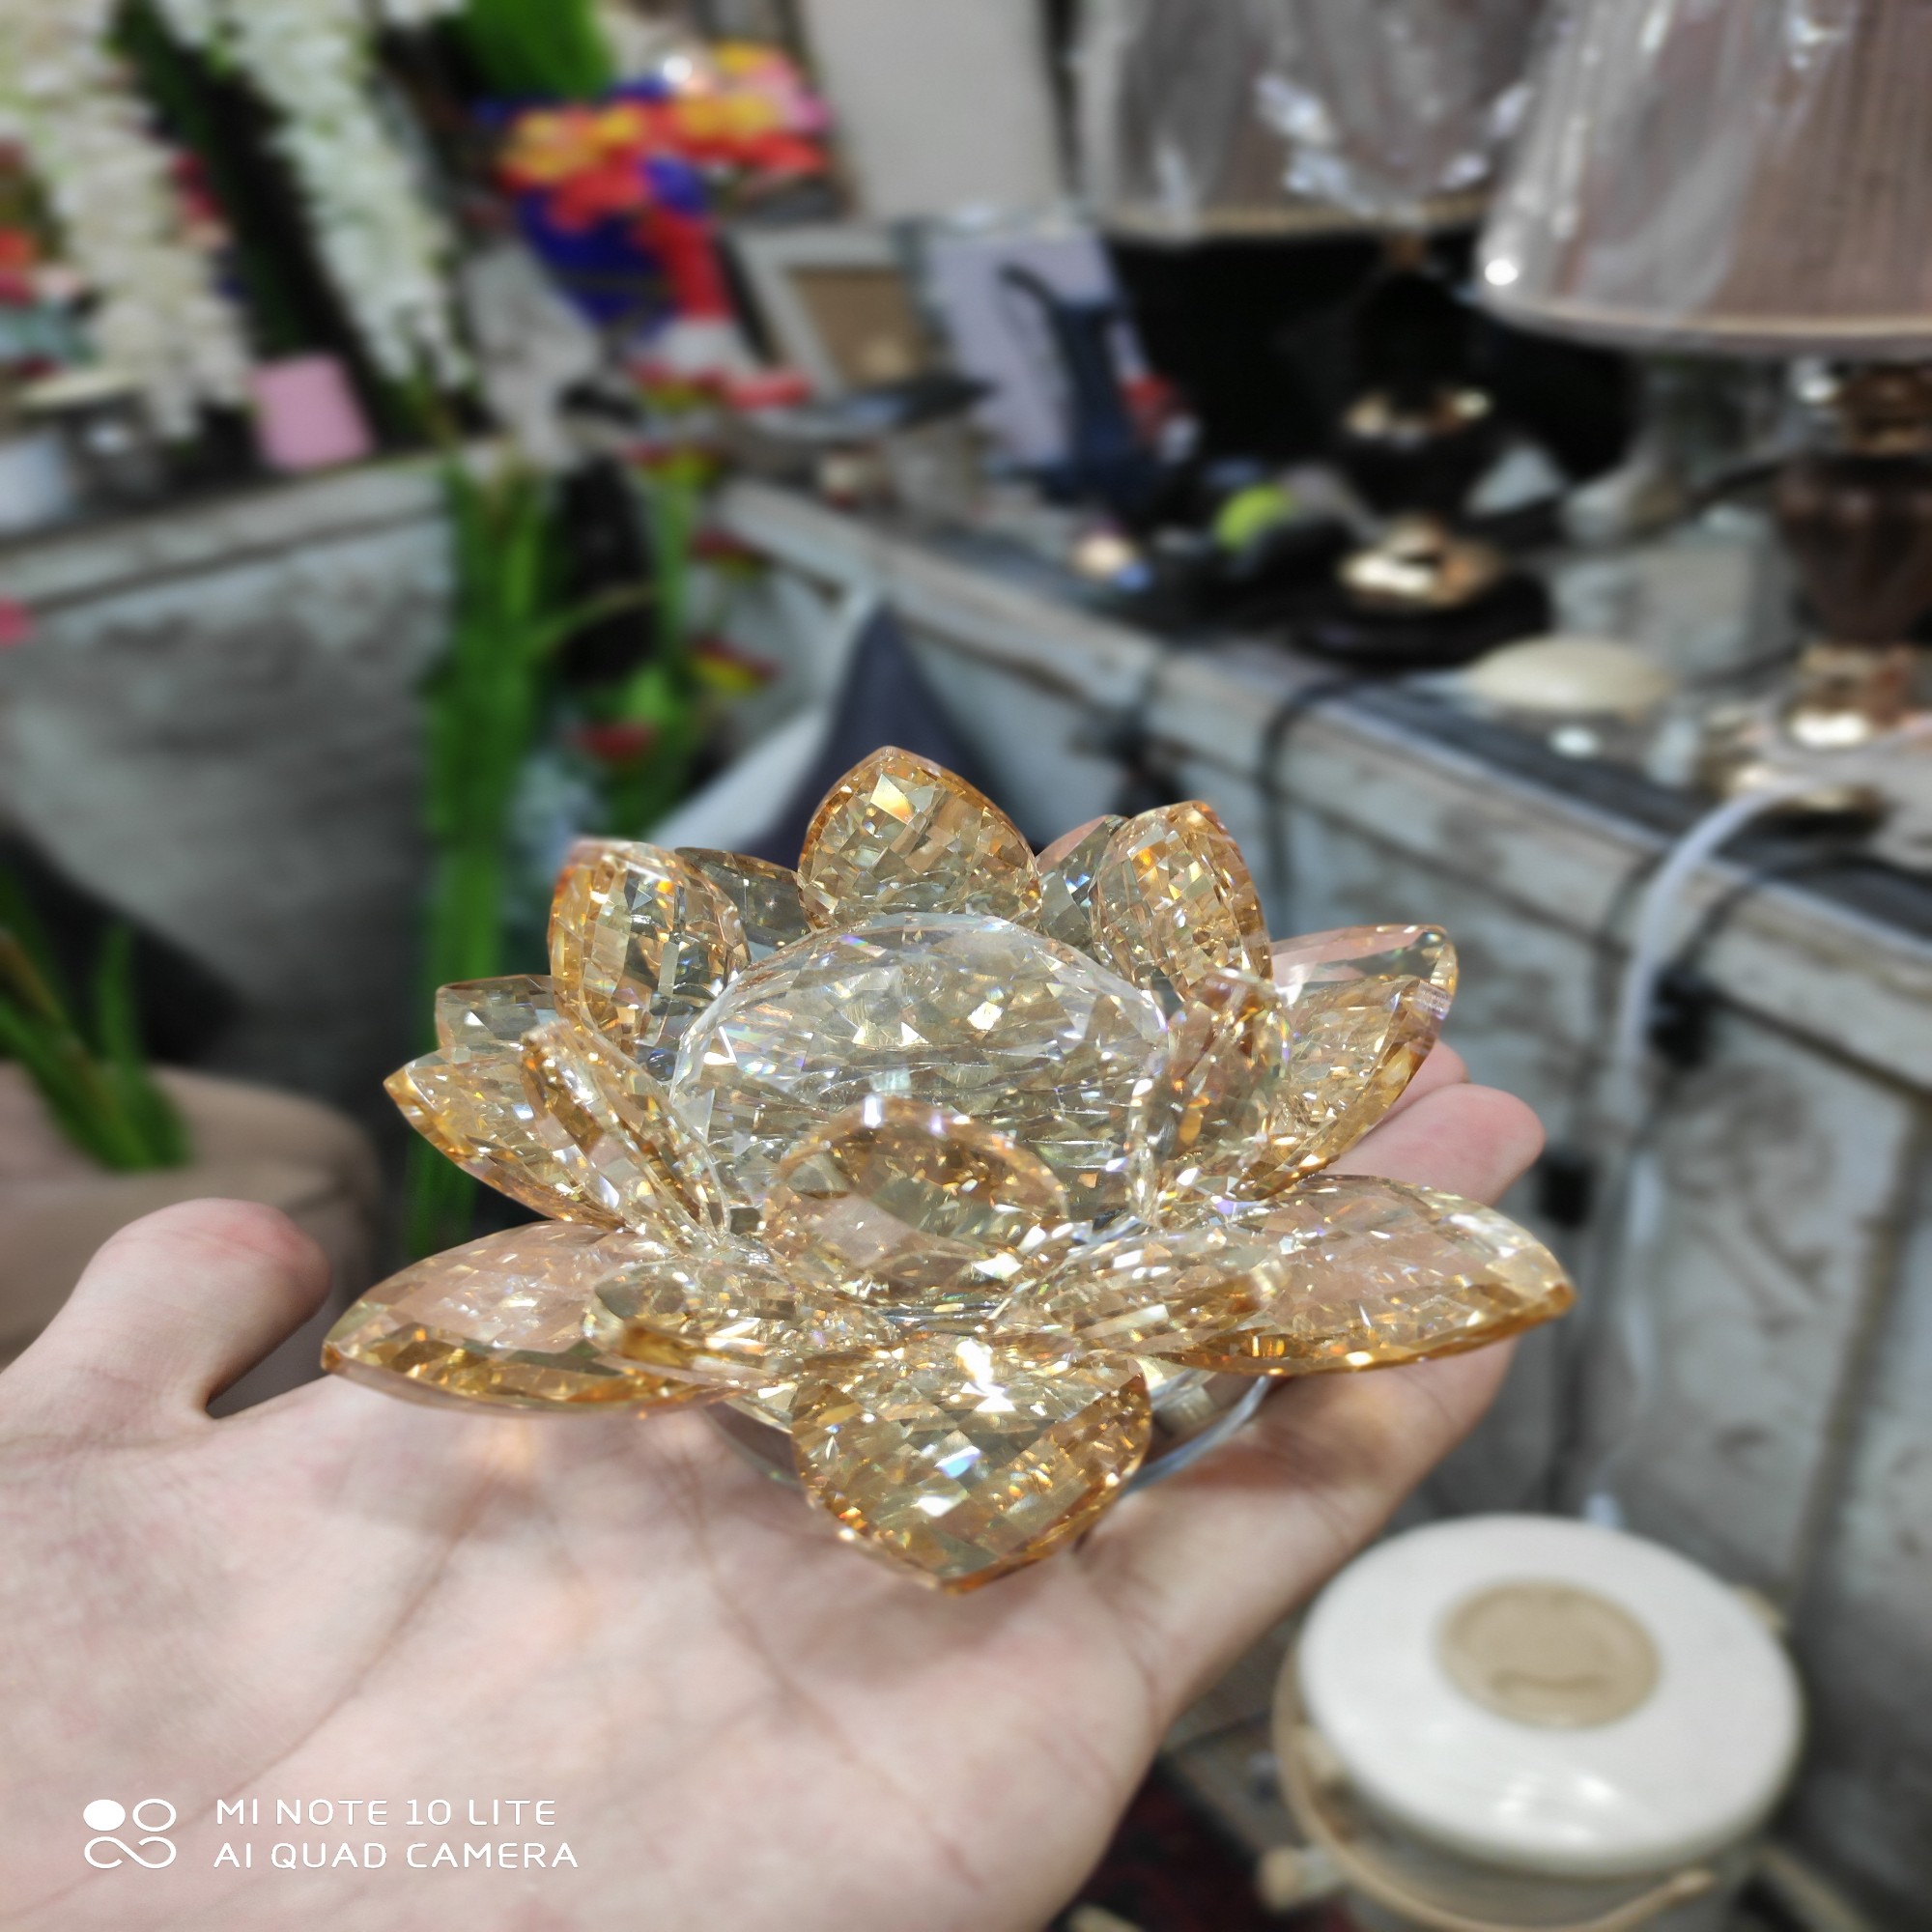 Shiny Crystal Flower Show Piece For Hoom Decoration,14cm Ã— 14cm Width